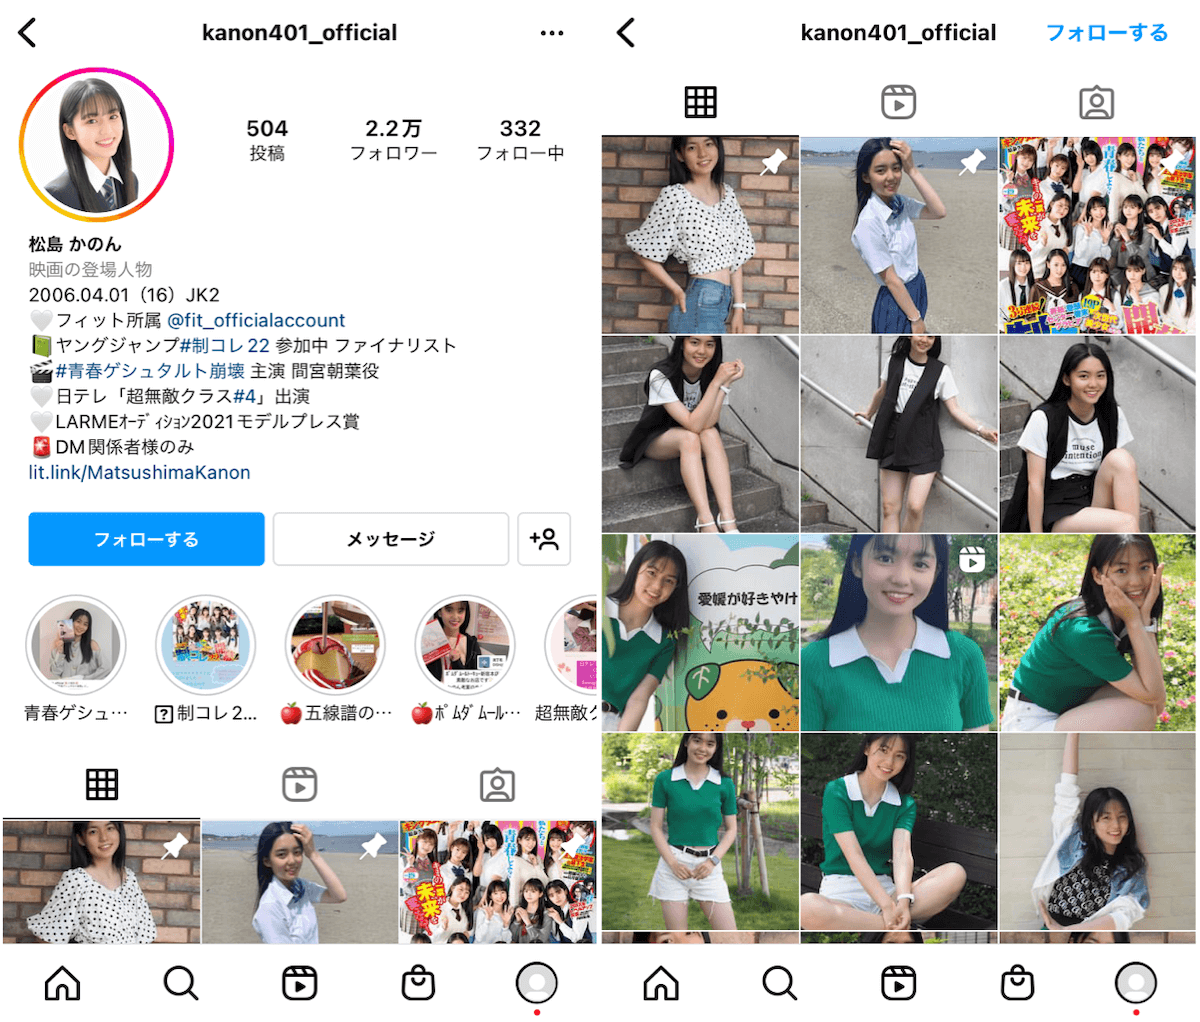 Instagram-teen-fashion-high-school-kanon401_official